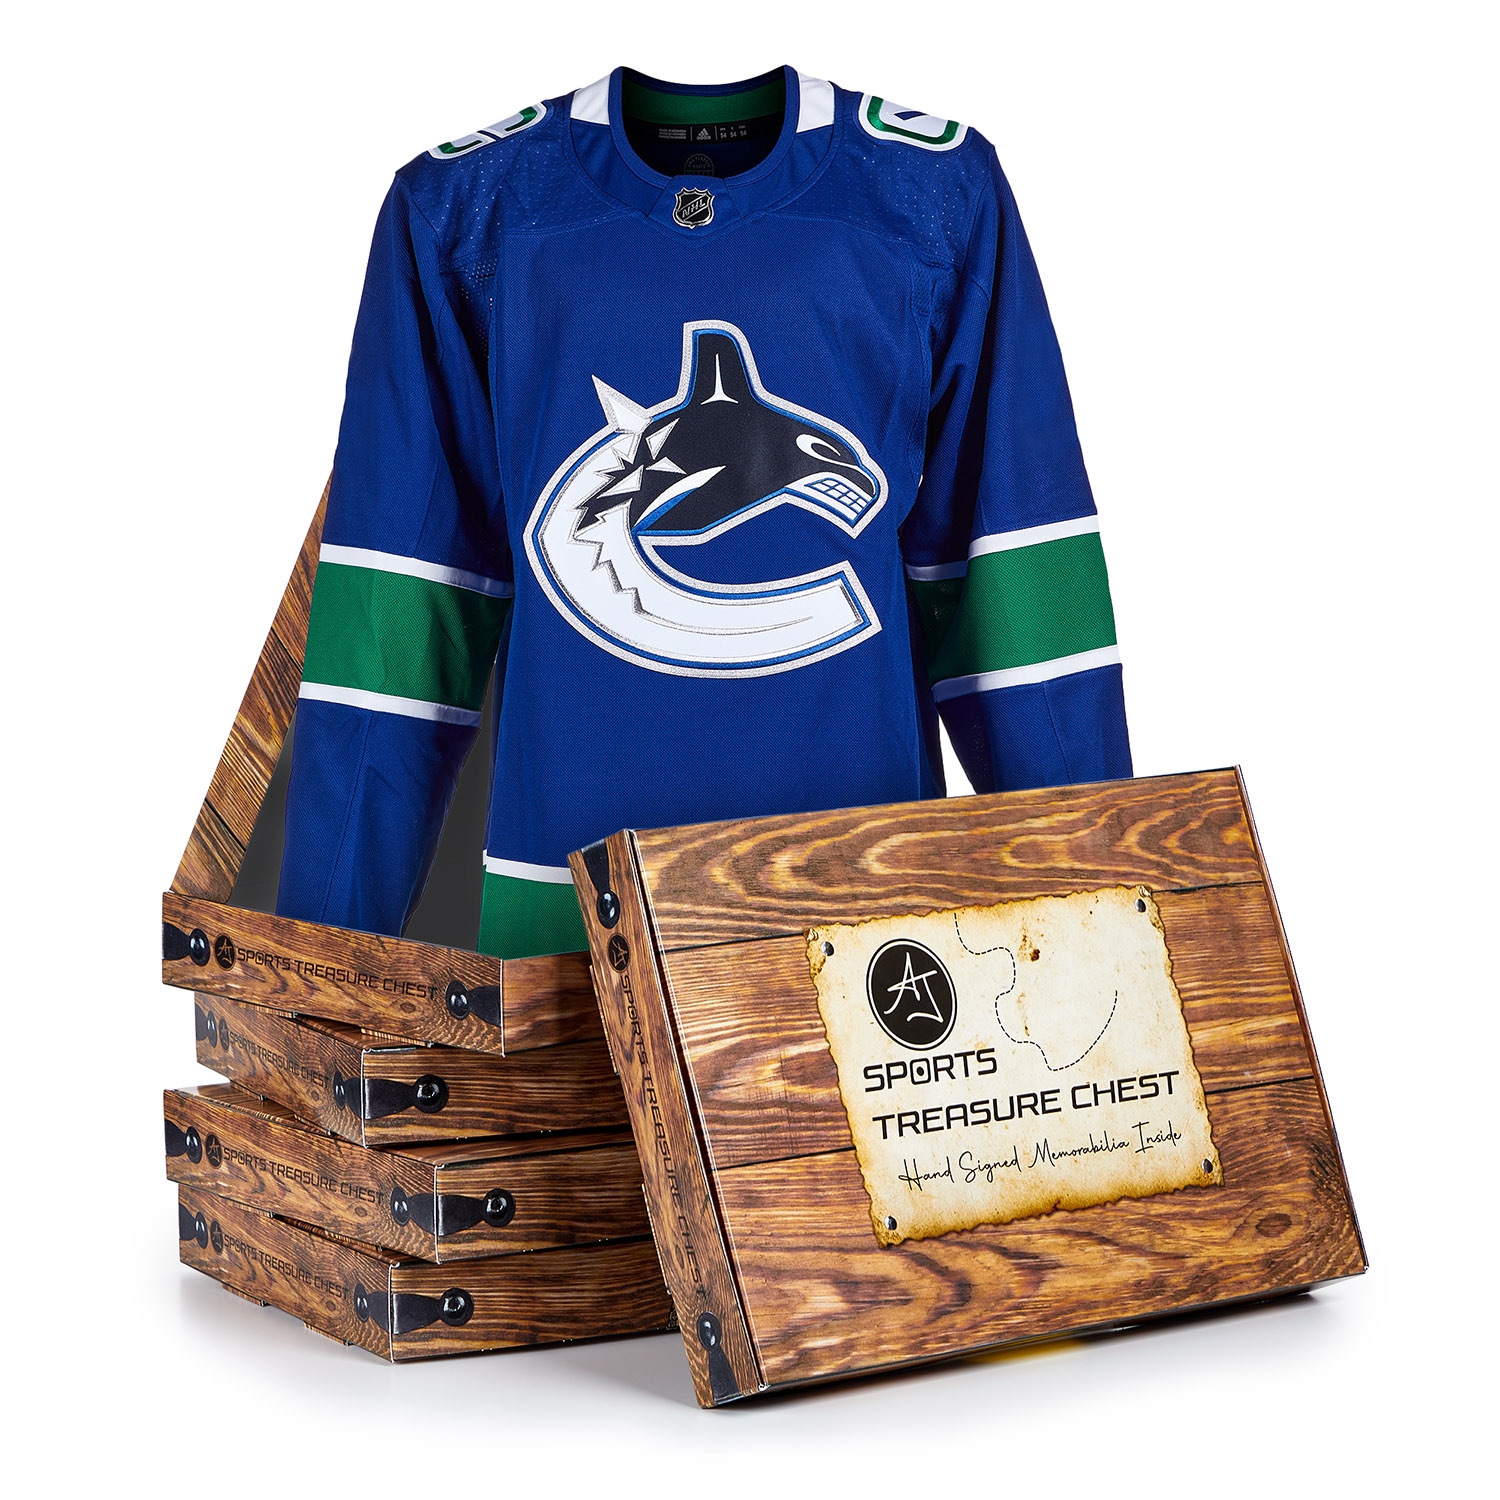 AJ Sports Vancouver Hockey Hat Trick Signature Treasure Chest